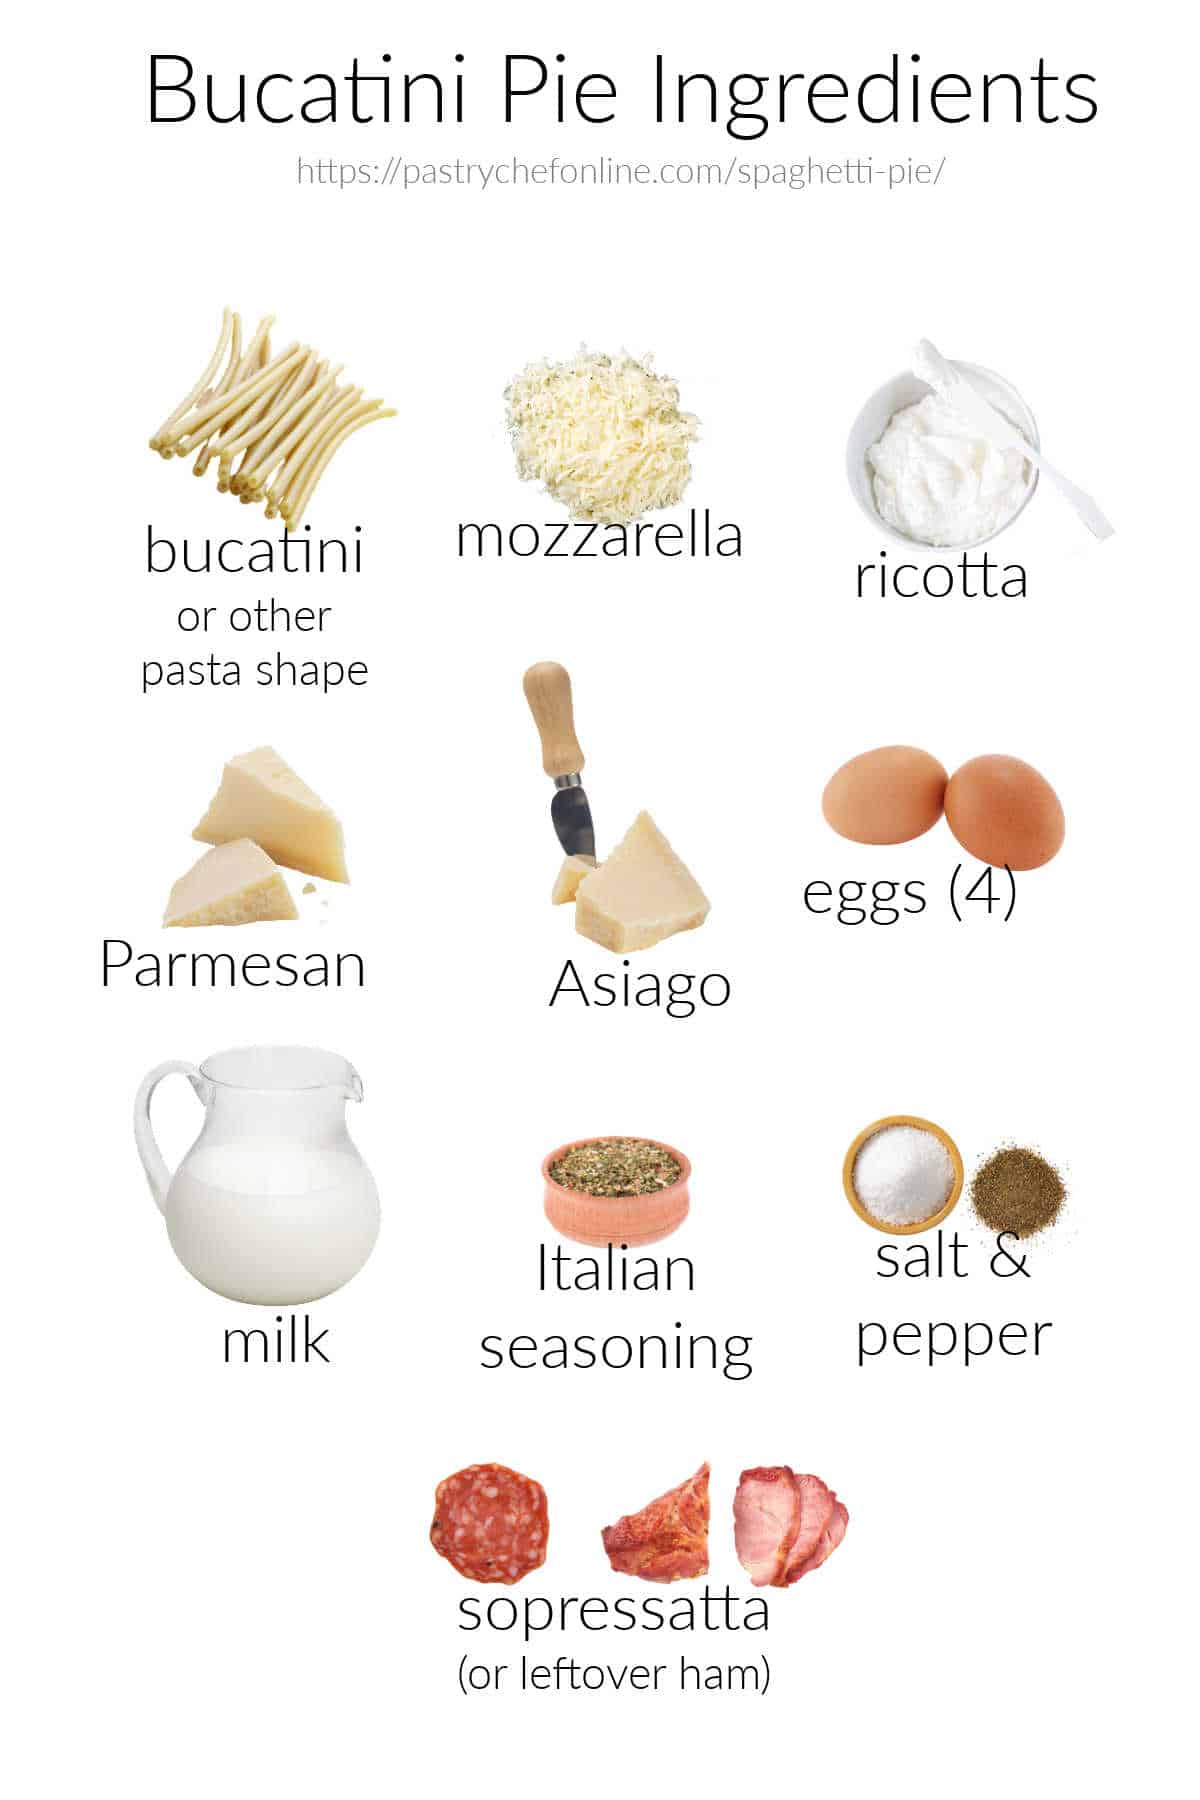 Ingredients needed to make bucatini pie: bucatini, mozzarella cheese, asiago cheese, ricotta, Parmesan, eggs, milk, Italian seasoning, salt & pepper, and soppressata.